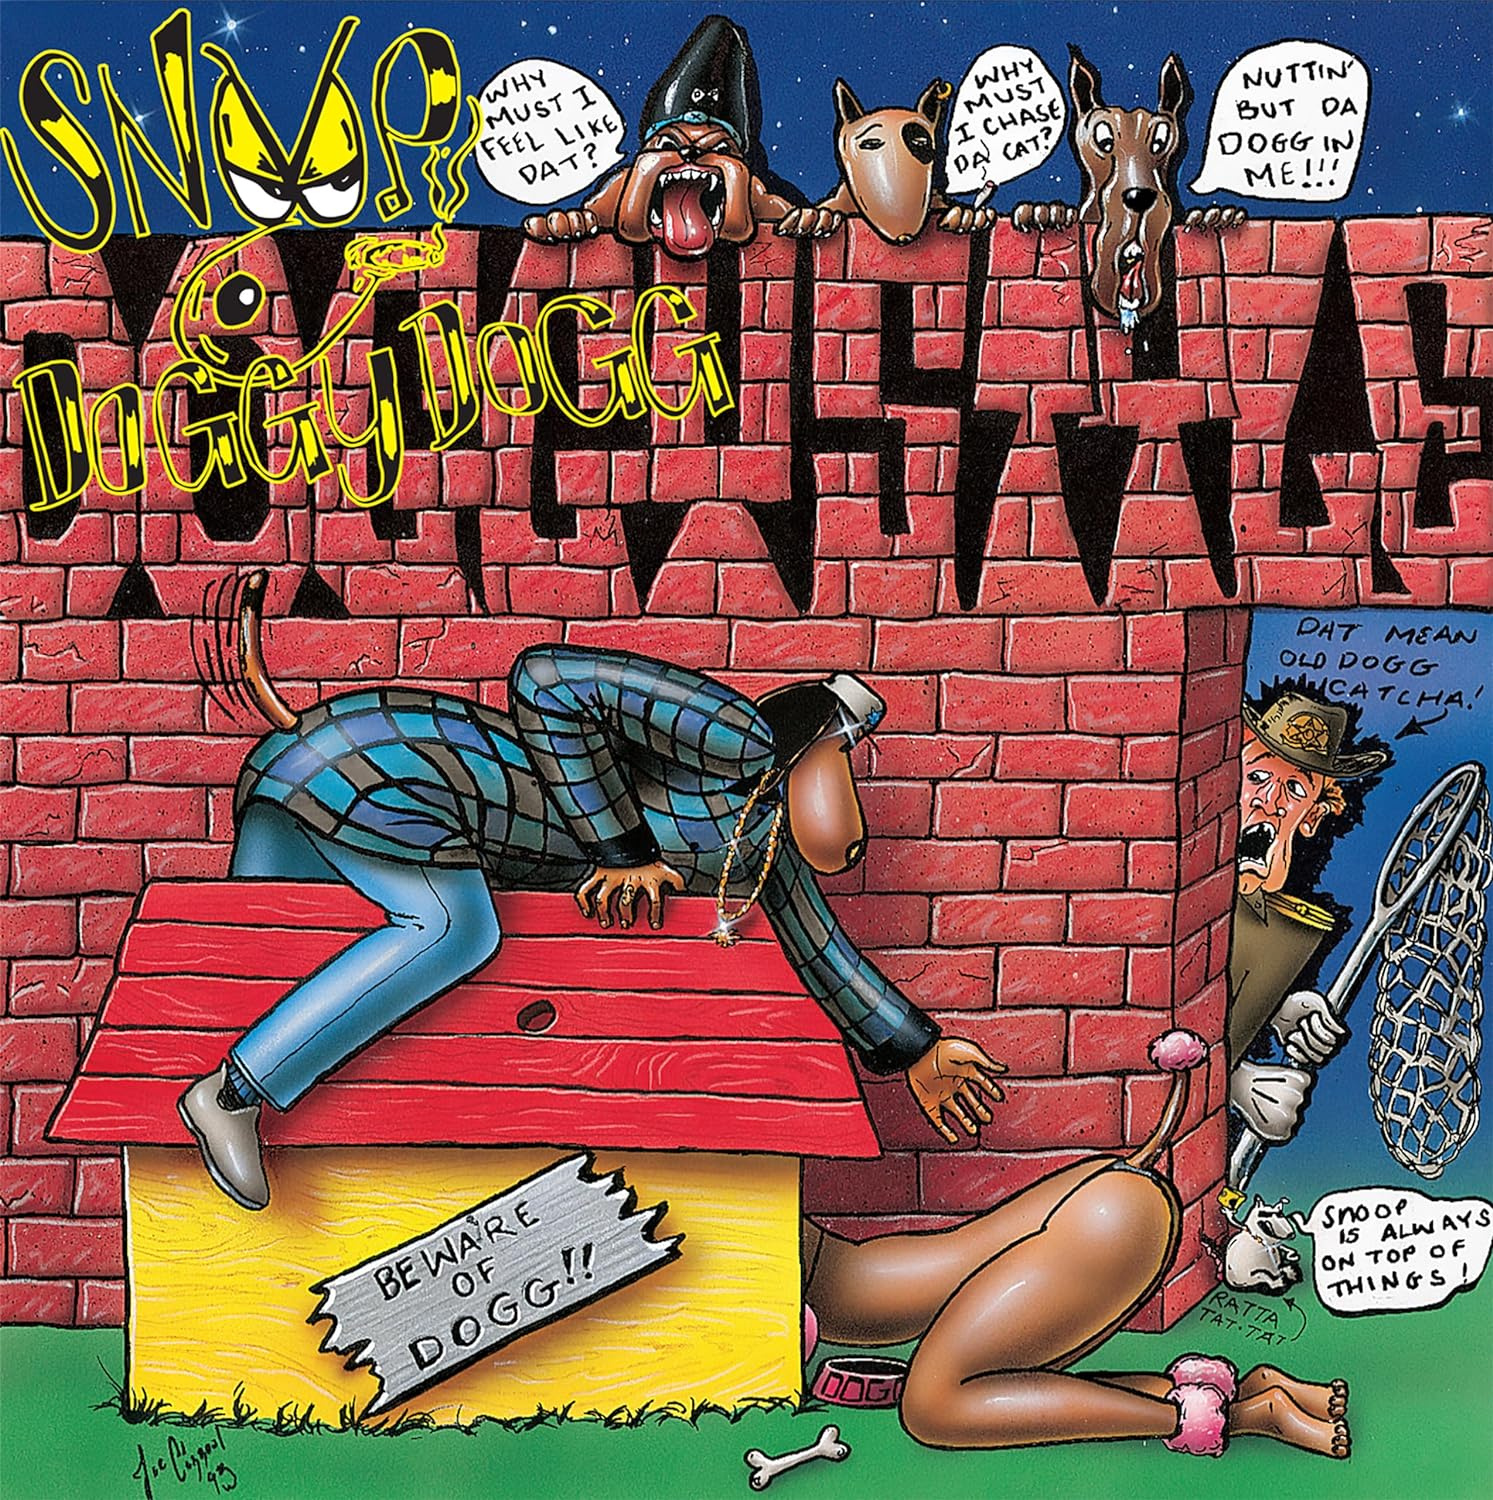 Snoop Doggy Dogg - Doggystyle vinyl cover